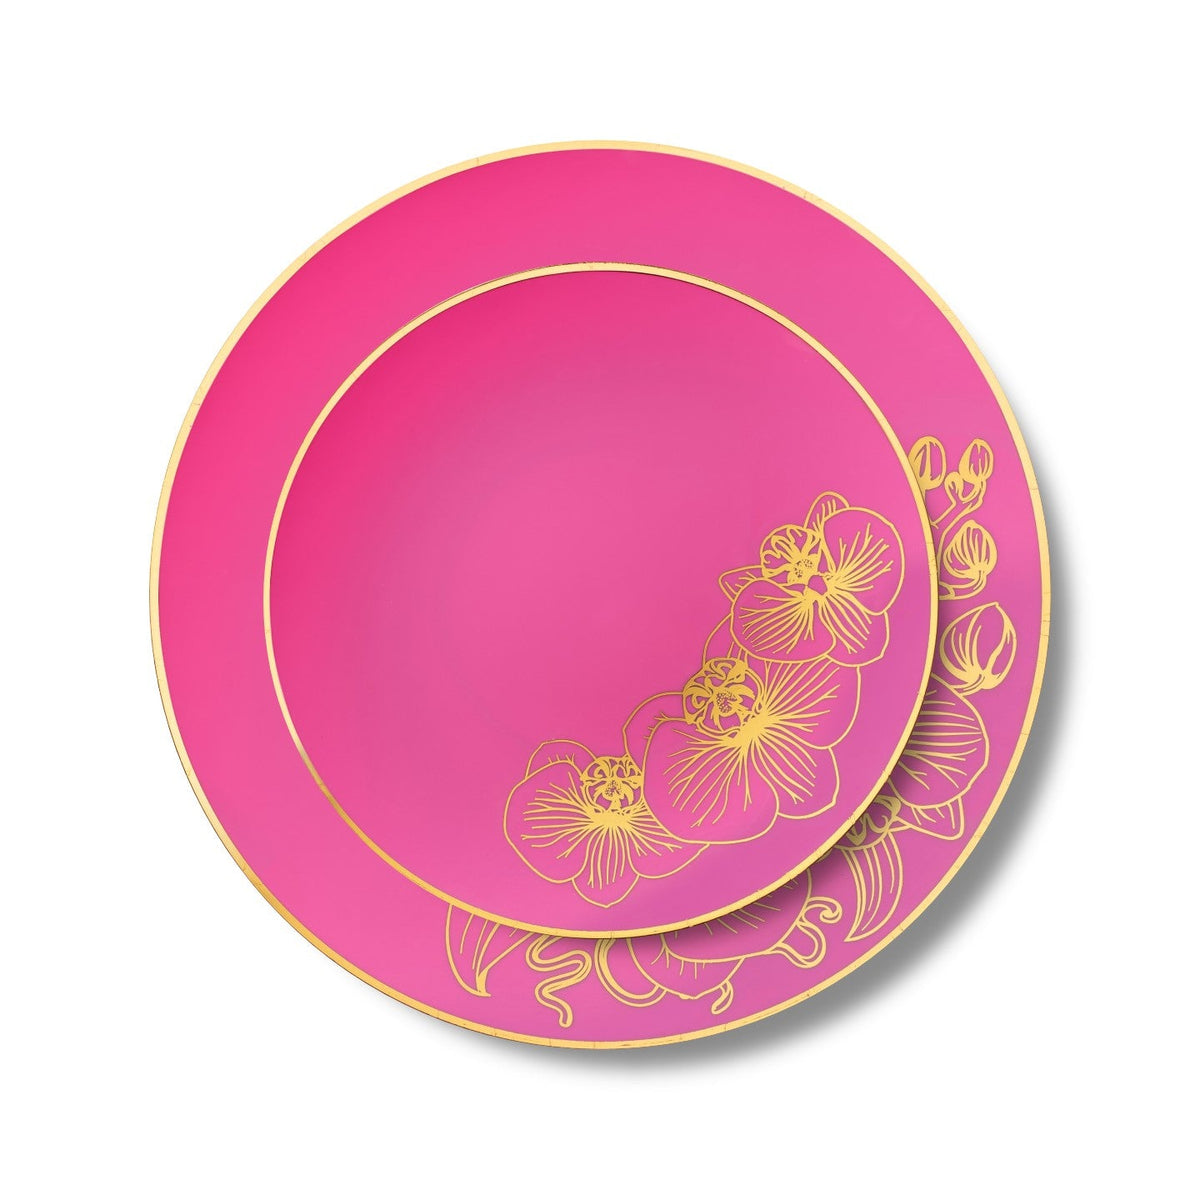 Round Bowl Dinnerware Set, Soft Lilac